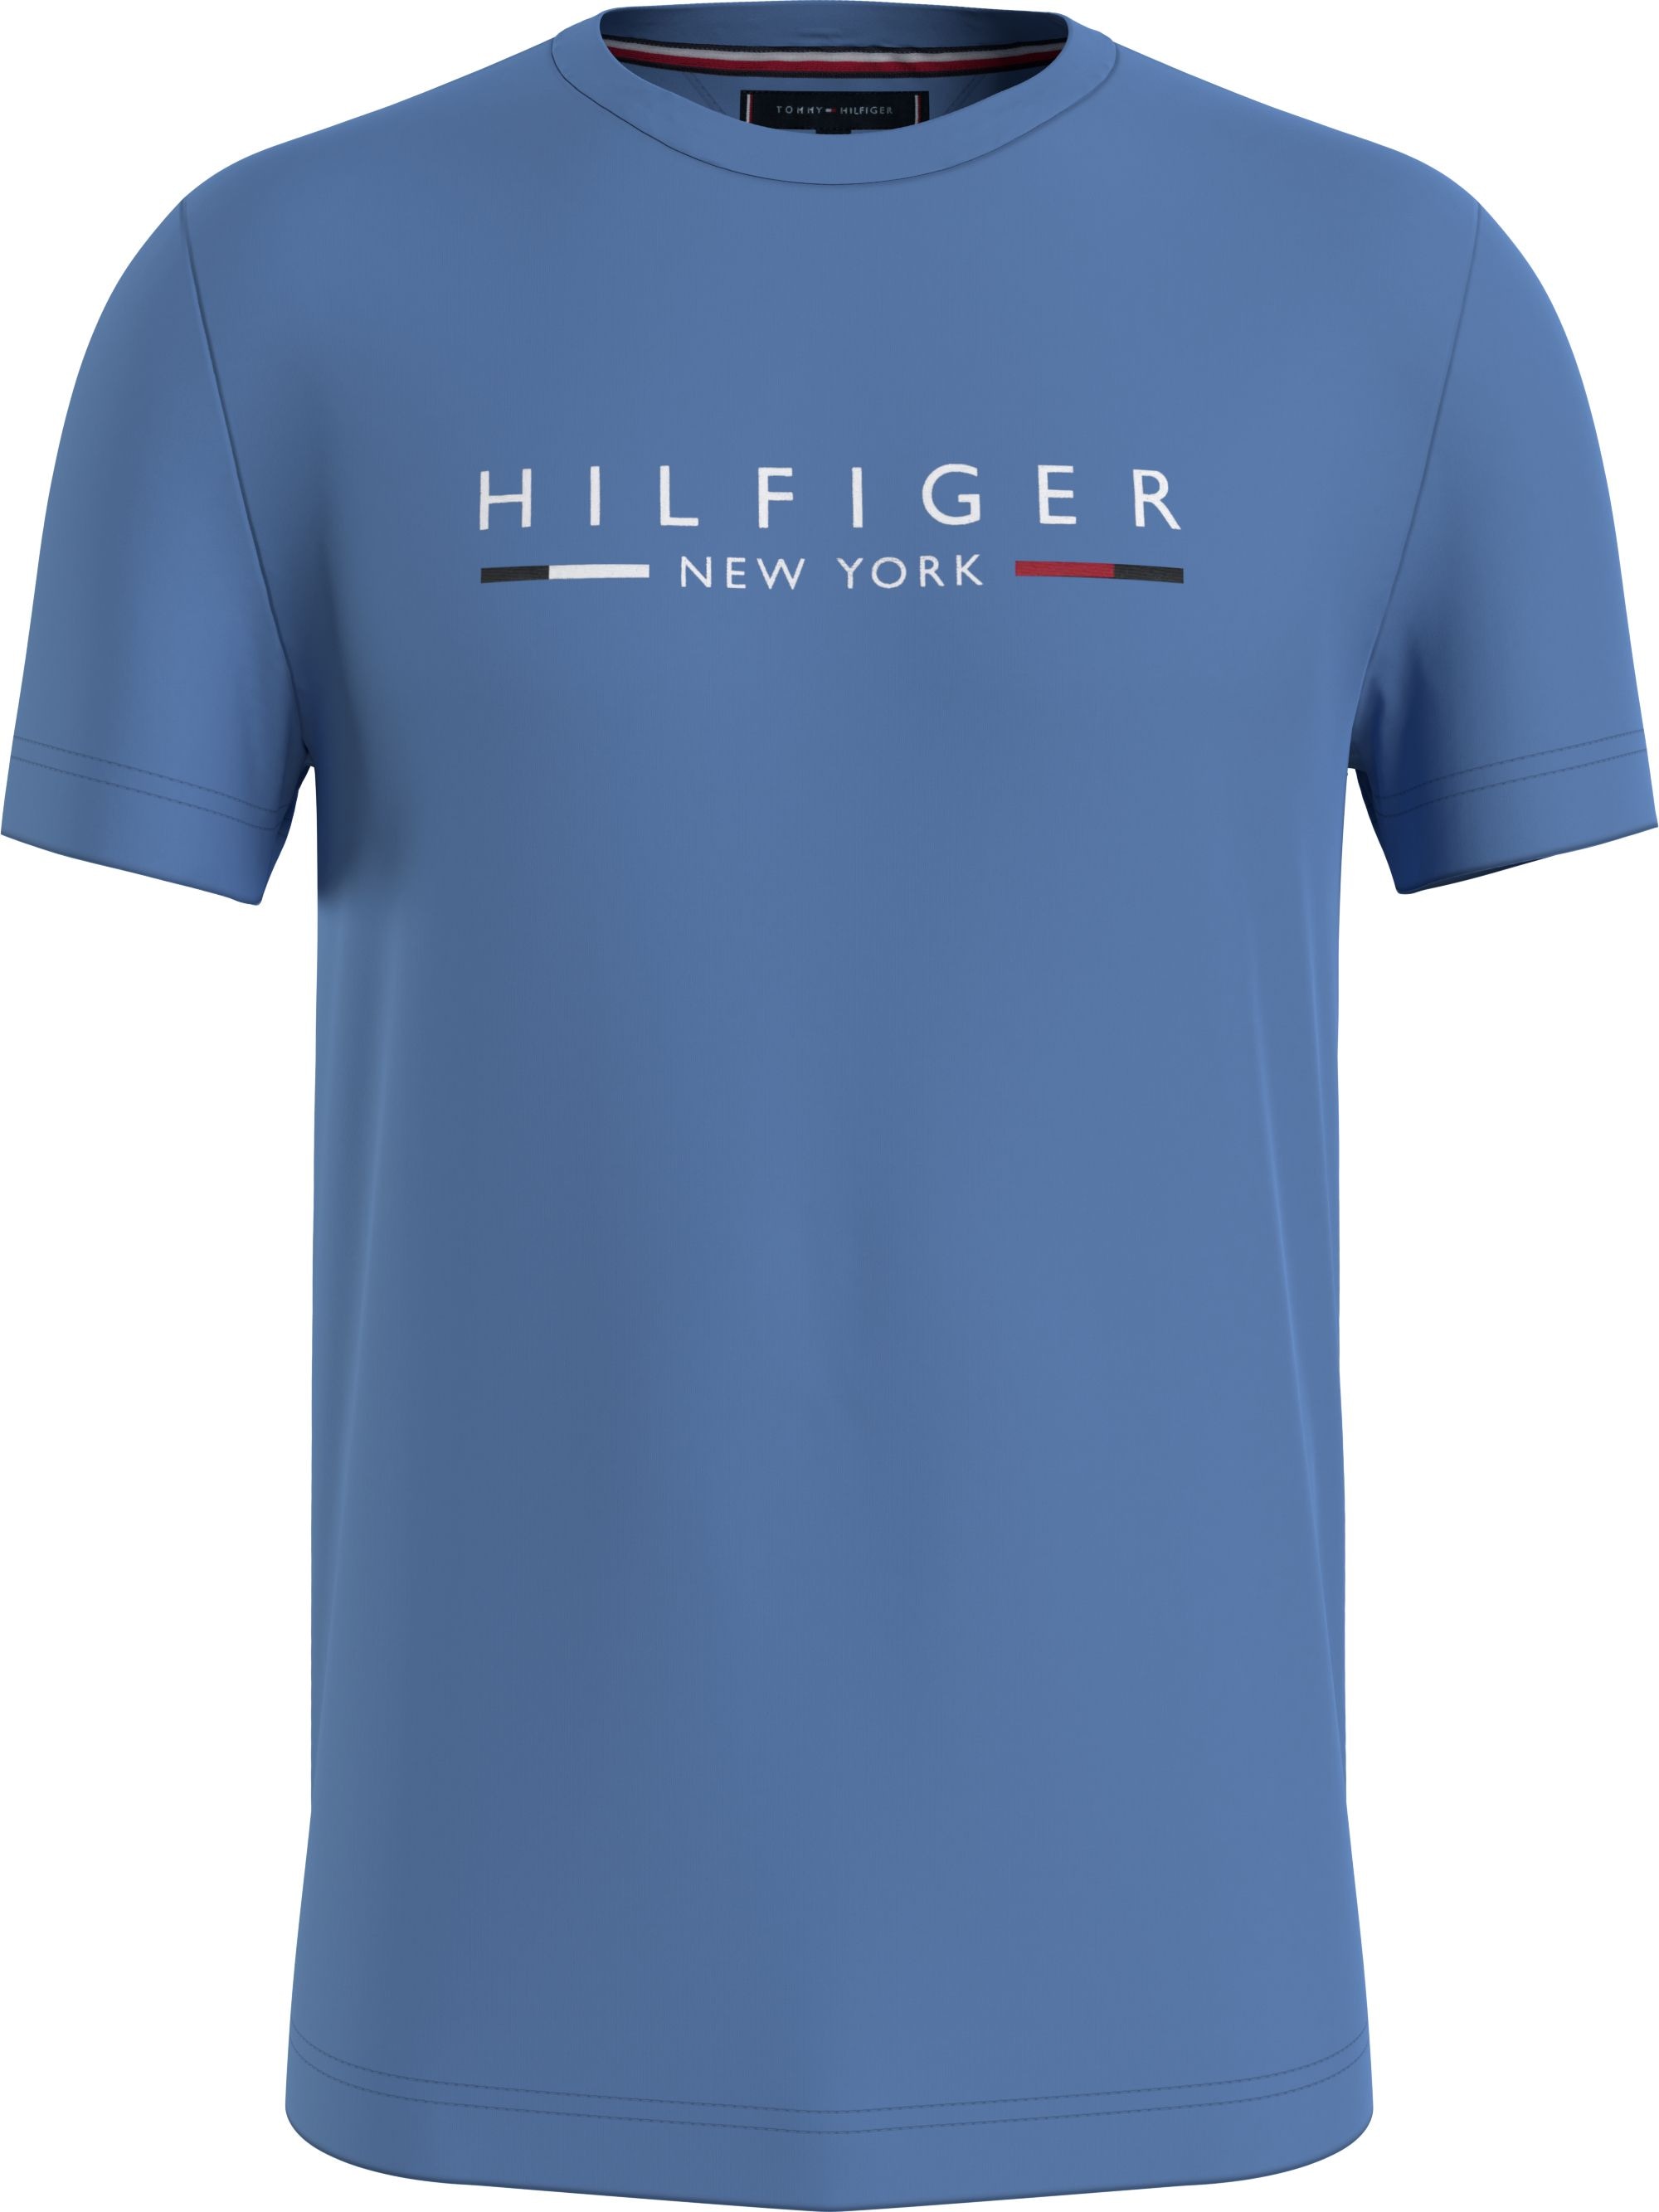 TOMMY HILFIGER Marškinėliai »HILFIGER NEW YORK TEE«